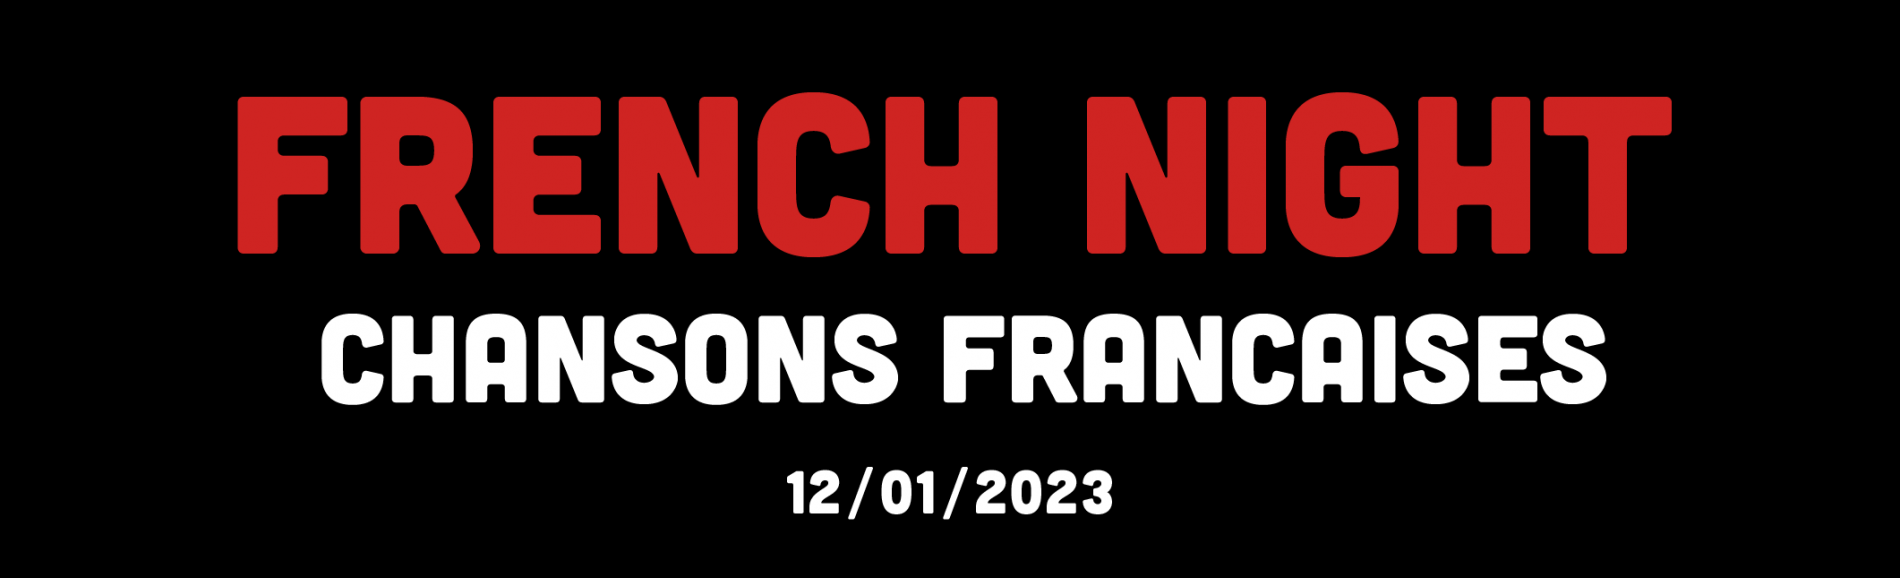 FRENCH NIGHT 12/01/2023